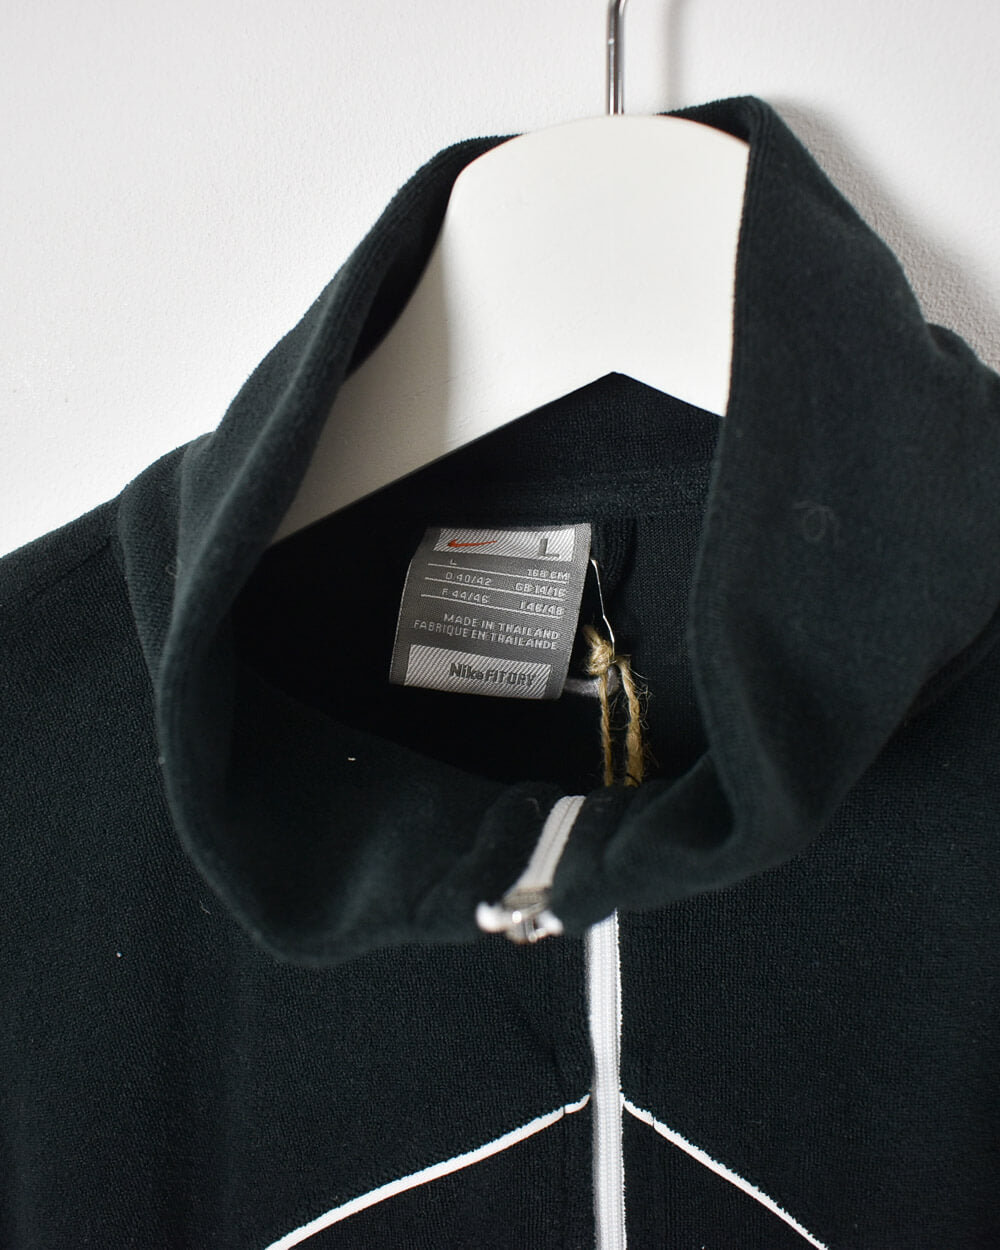 Nike Women's Velour Zip-Through Sweatshirt - Large - Domno Vintage 90s, 80s, 00s Retro and Vintage Clothing 